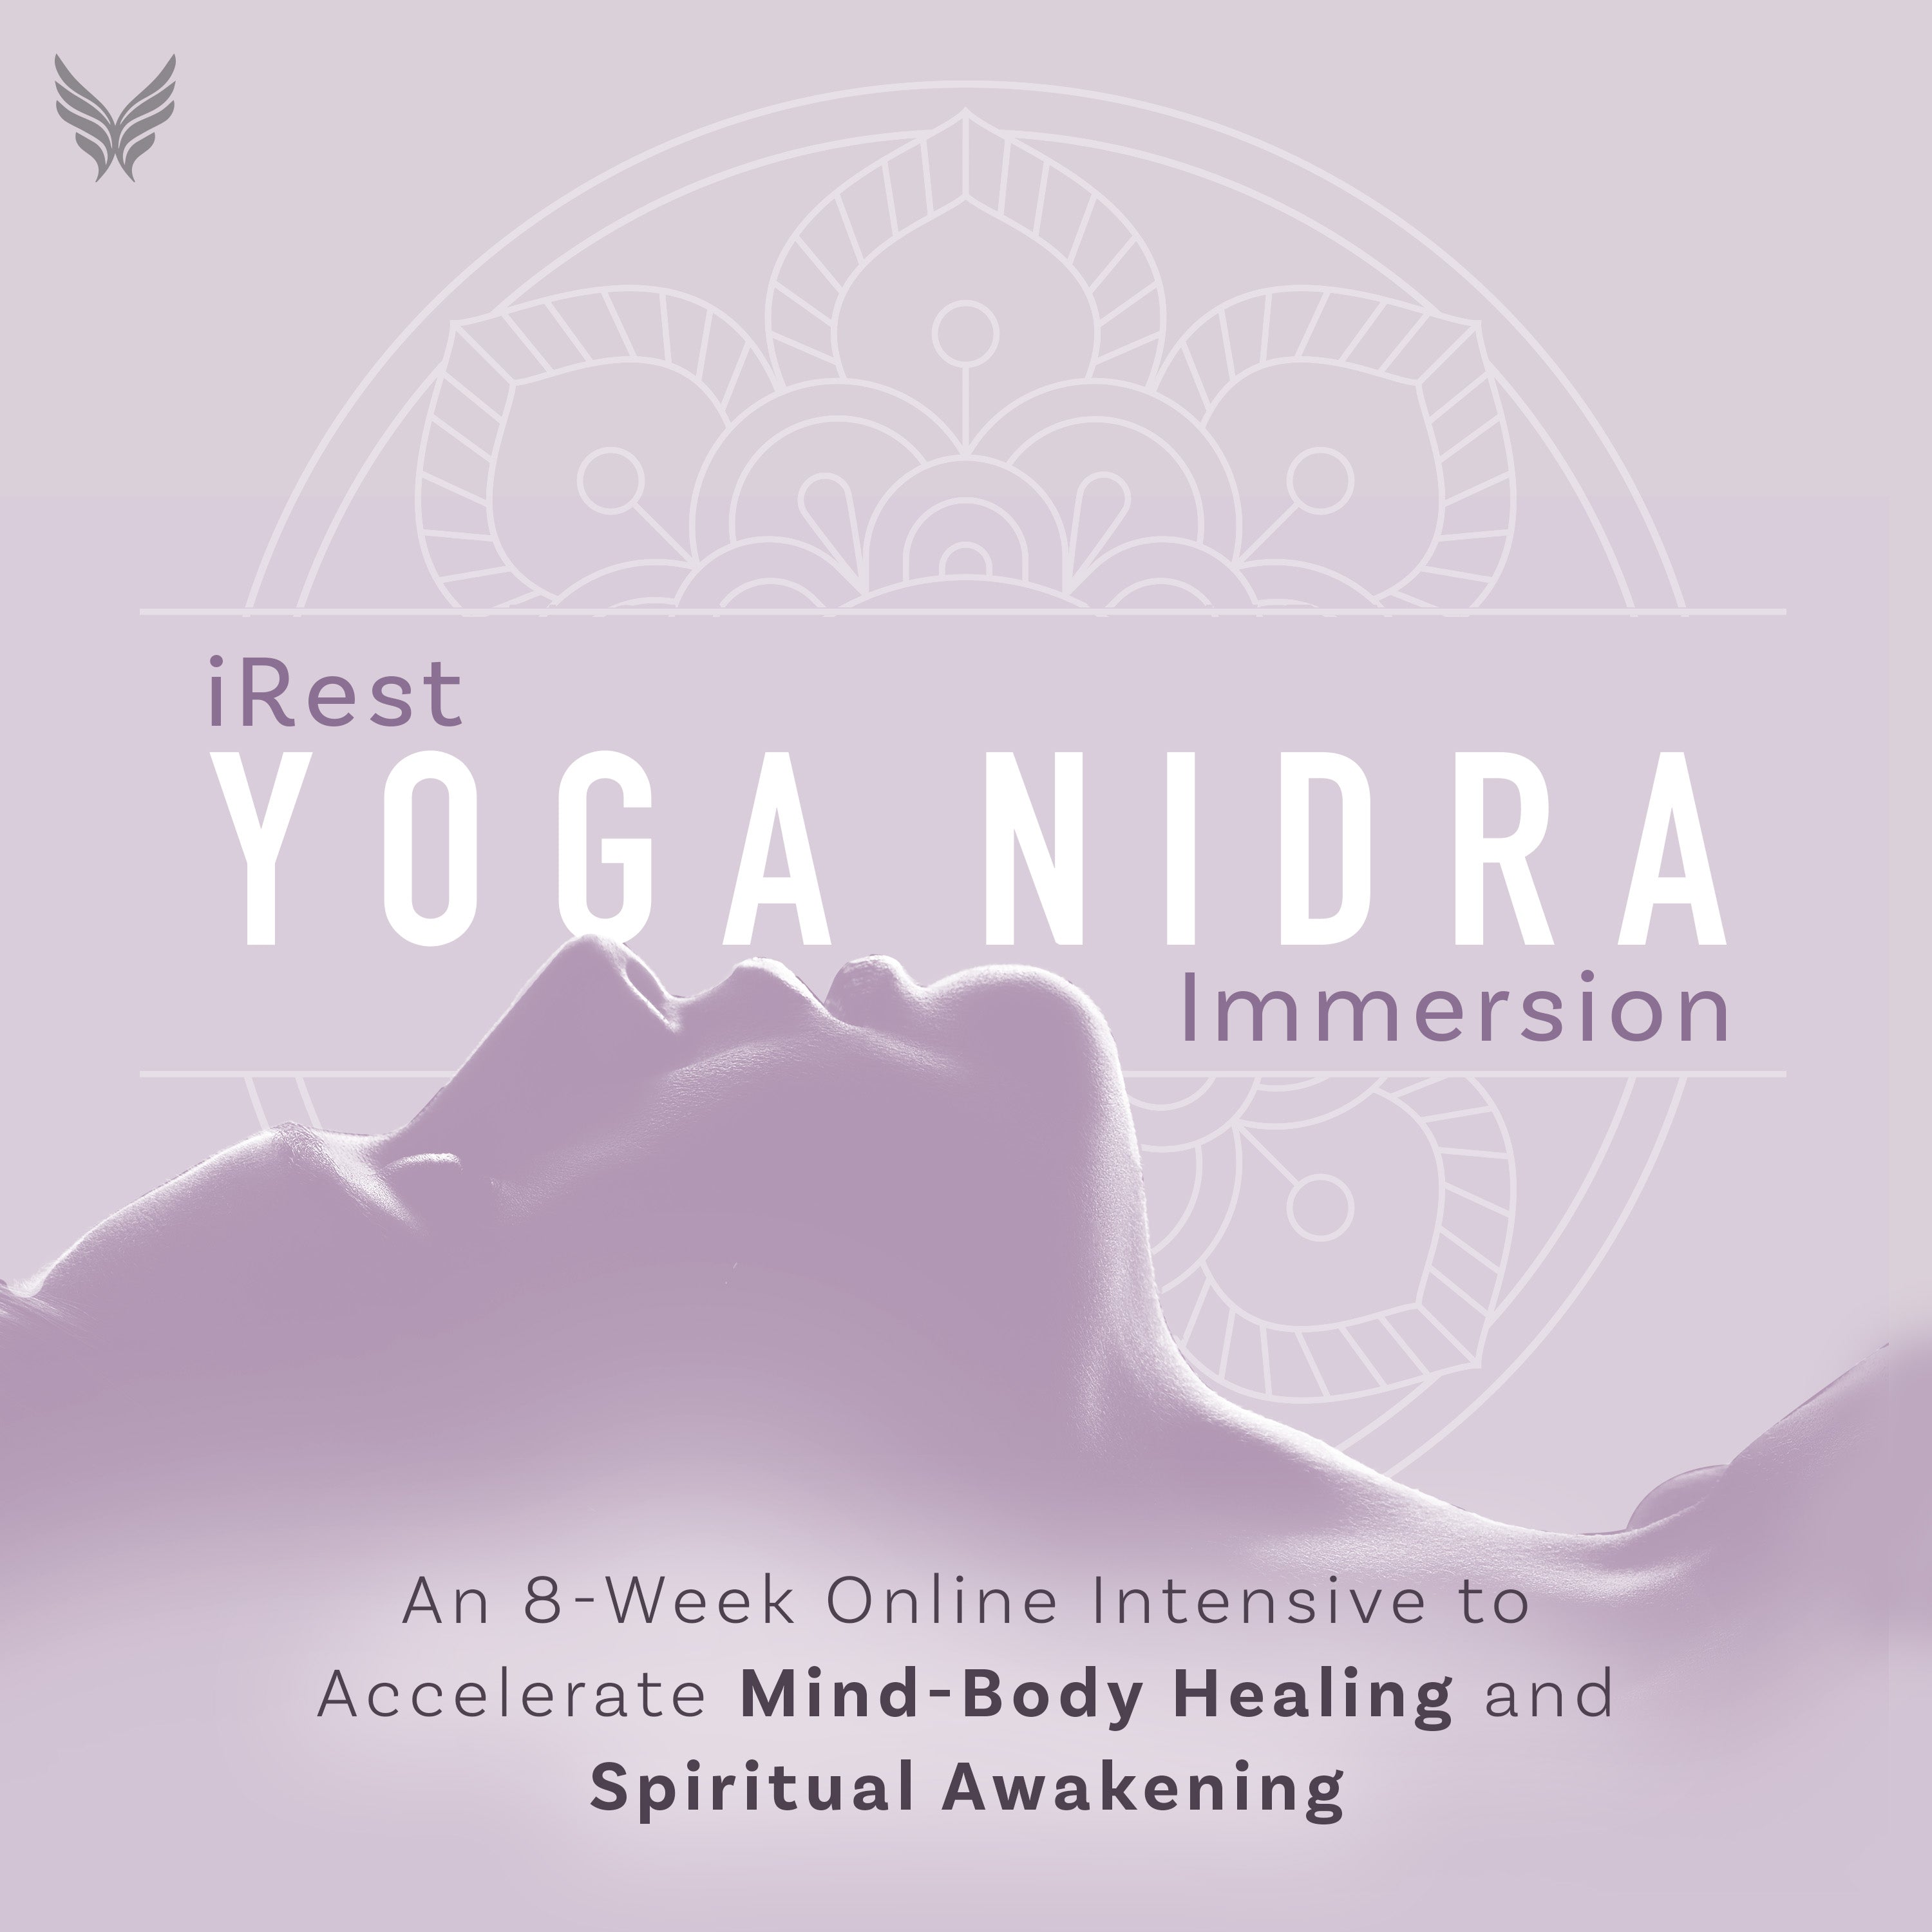 iRest Yoga Nidra Immersion